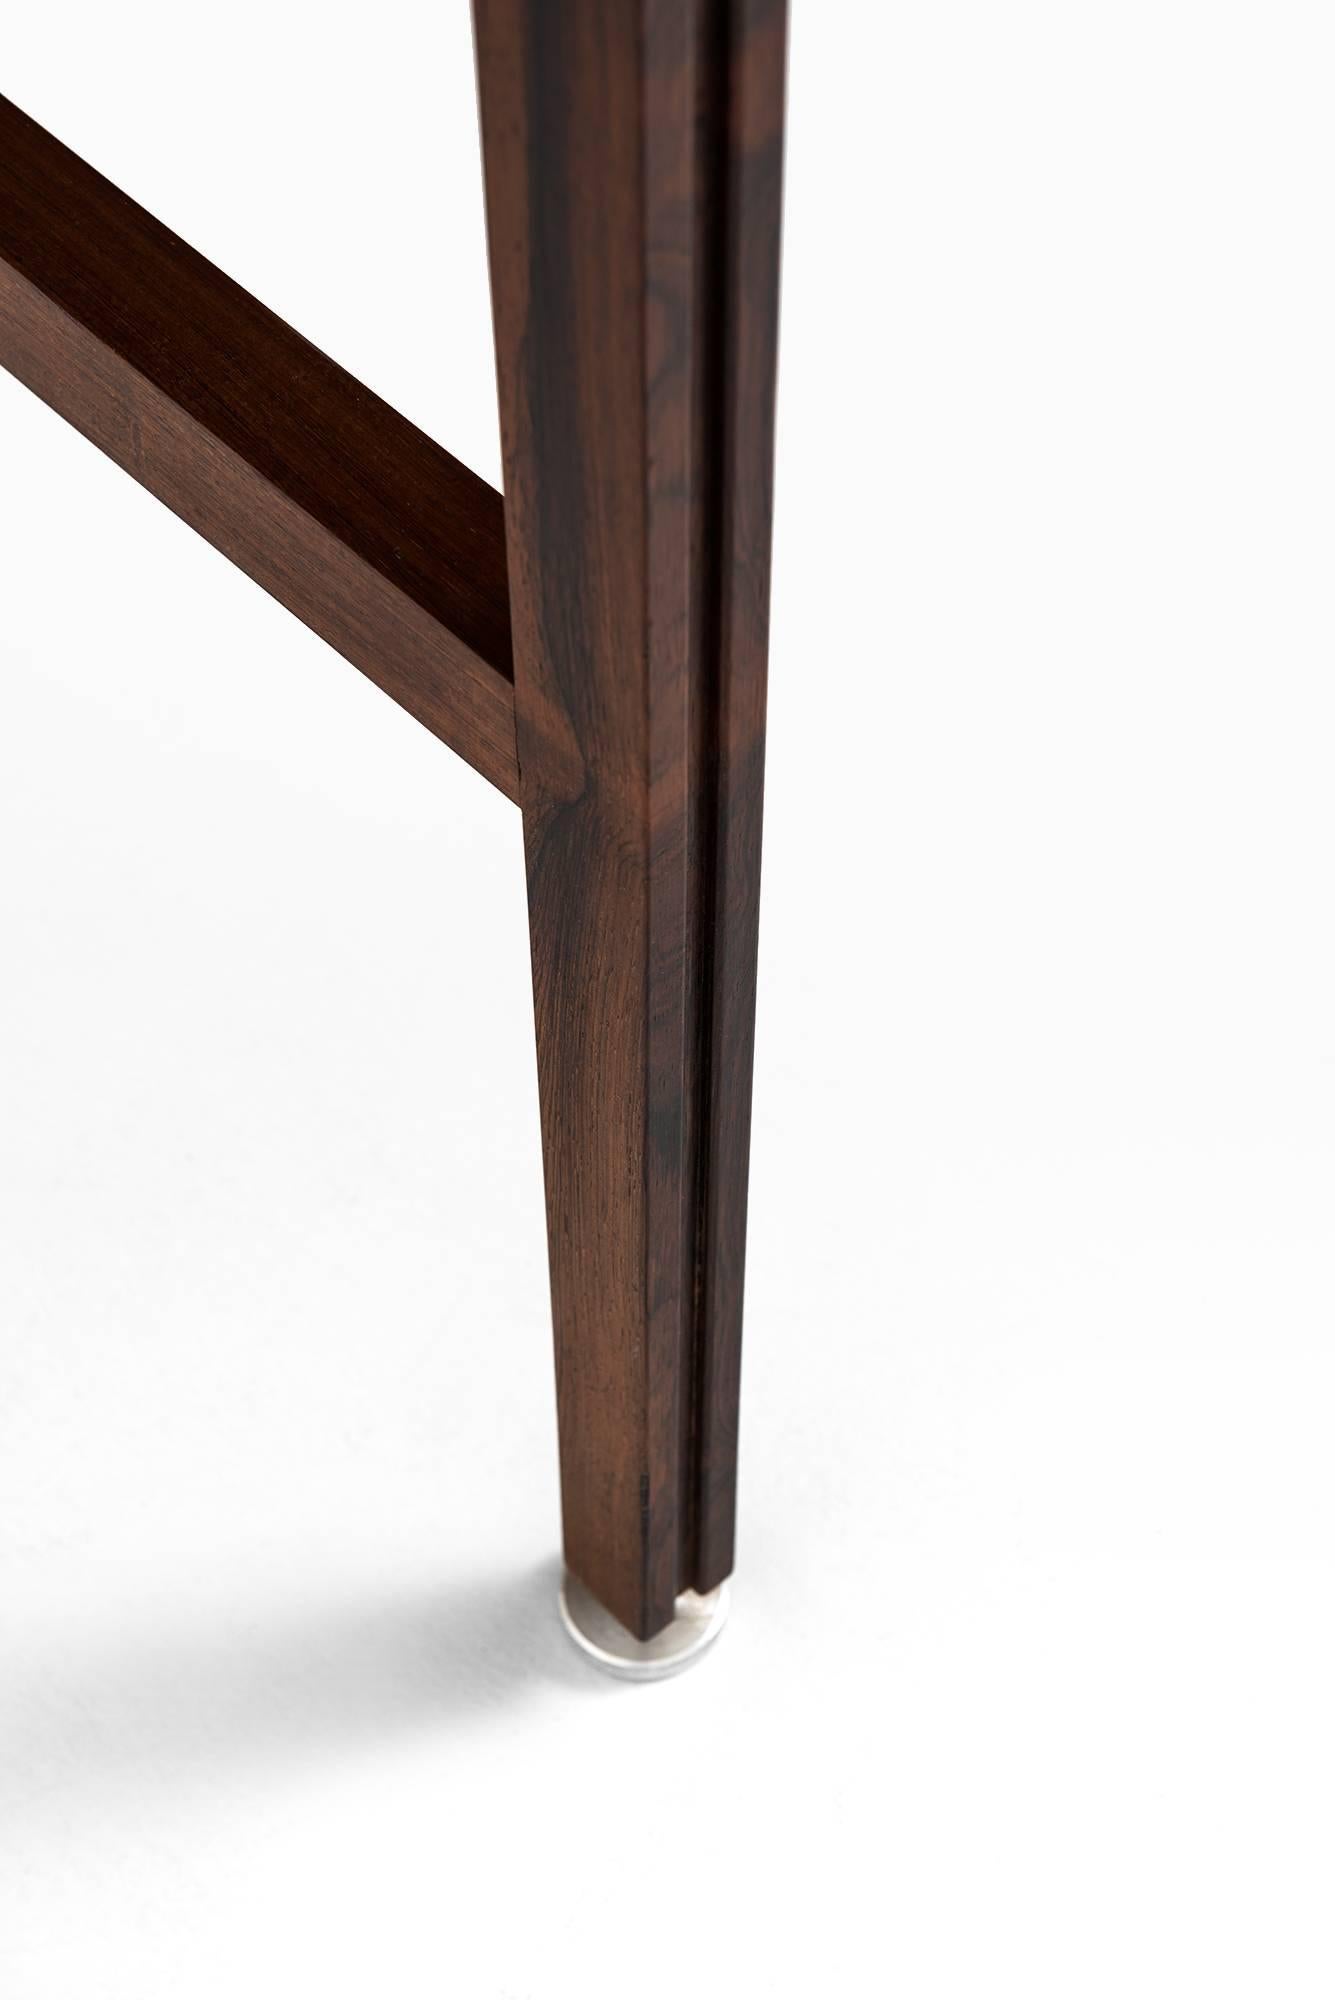 Jens Risom Table Model 96 by Jens Risom Design in America 1